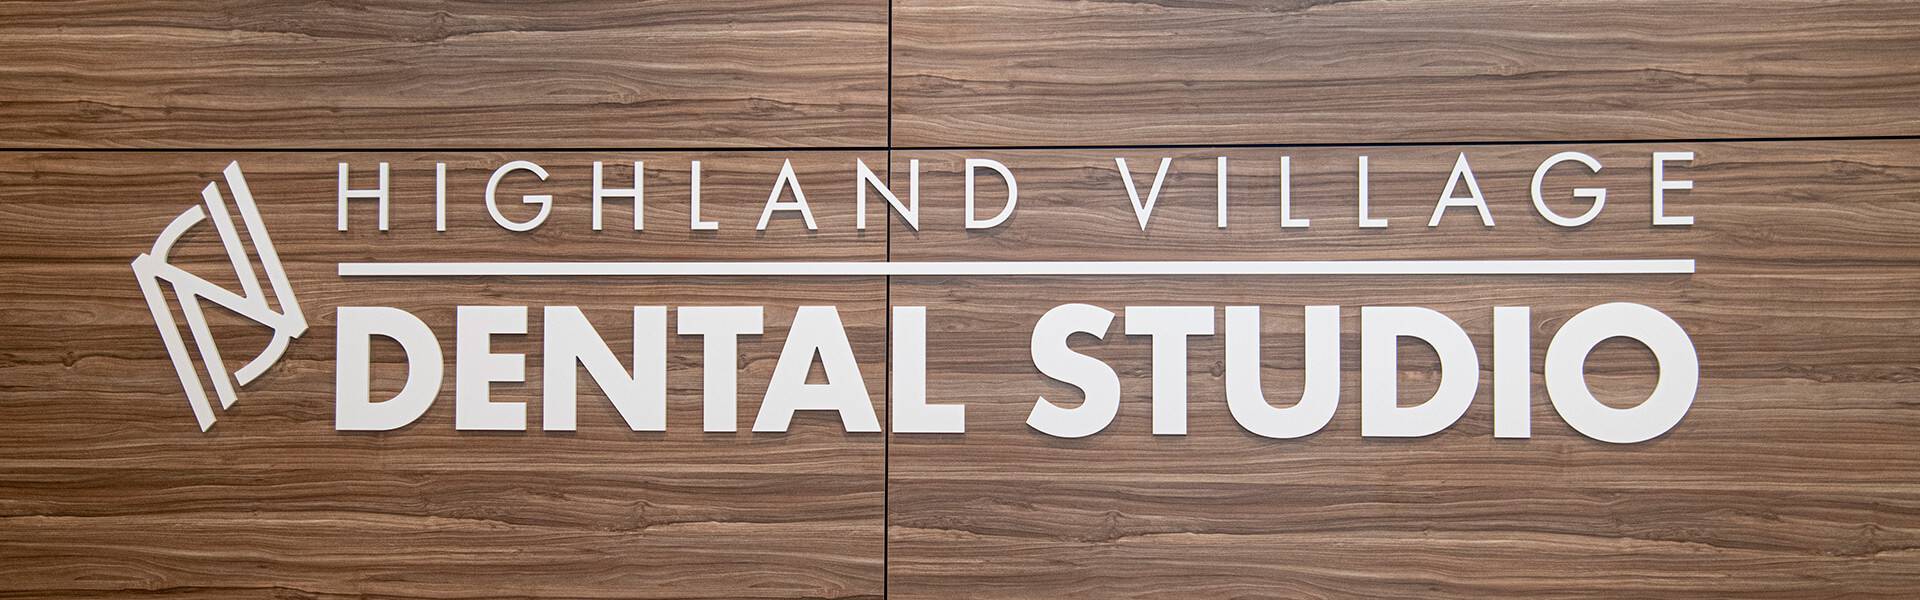 banner Highland Village Dental Studio